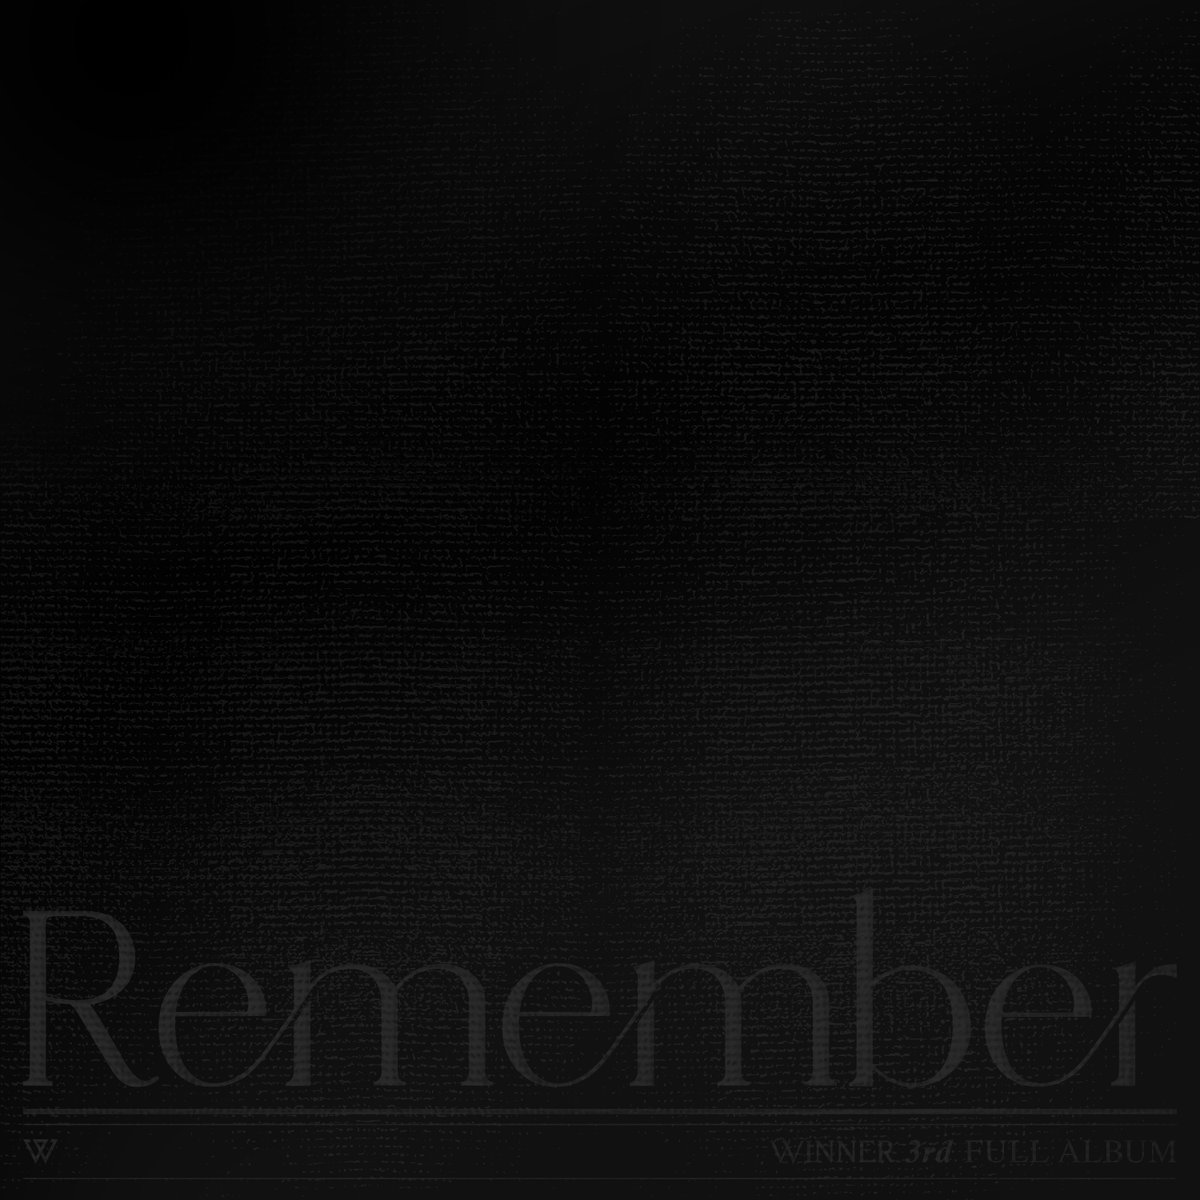 #WINNER 3rd FULL ALBUM [Remember] 

▶️business.facebook.com/OfficialYGWINN…

#위너 #YOON #강승윤 #JINU #김진우 #MINO #송민호 #HOONY #이승훈 #Remember #3rdFULLALBUM #WINNER_Remember #PHYSICALALBUM #YOU_ver #US_ver #20200410 #OFFLINERELEASE #YG